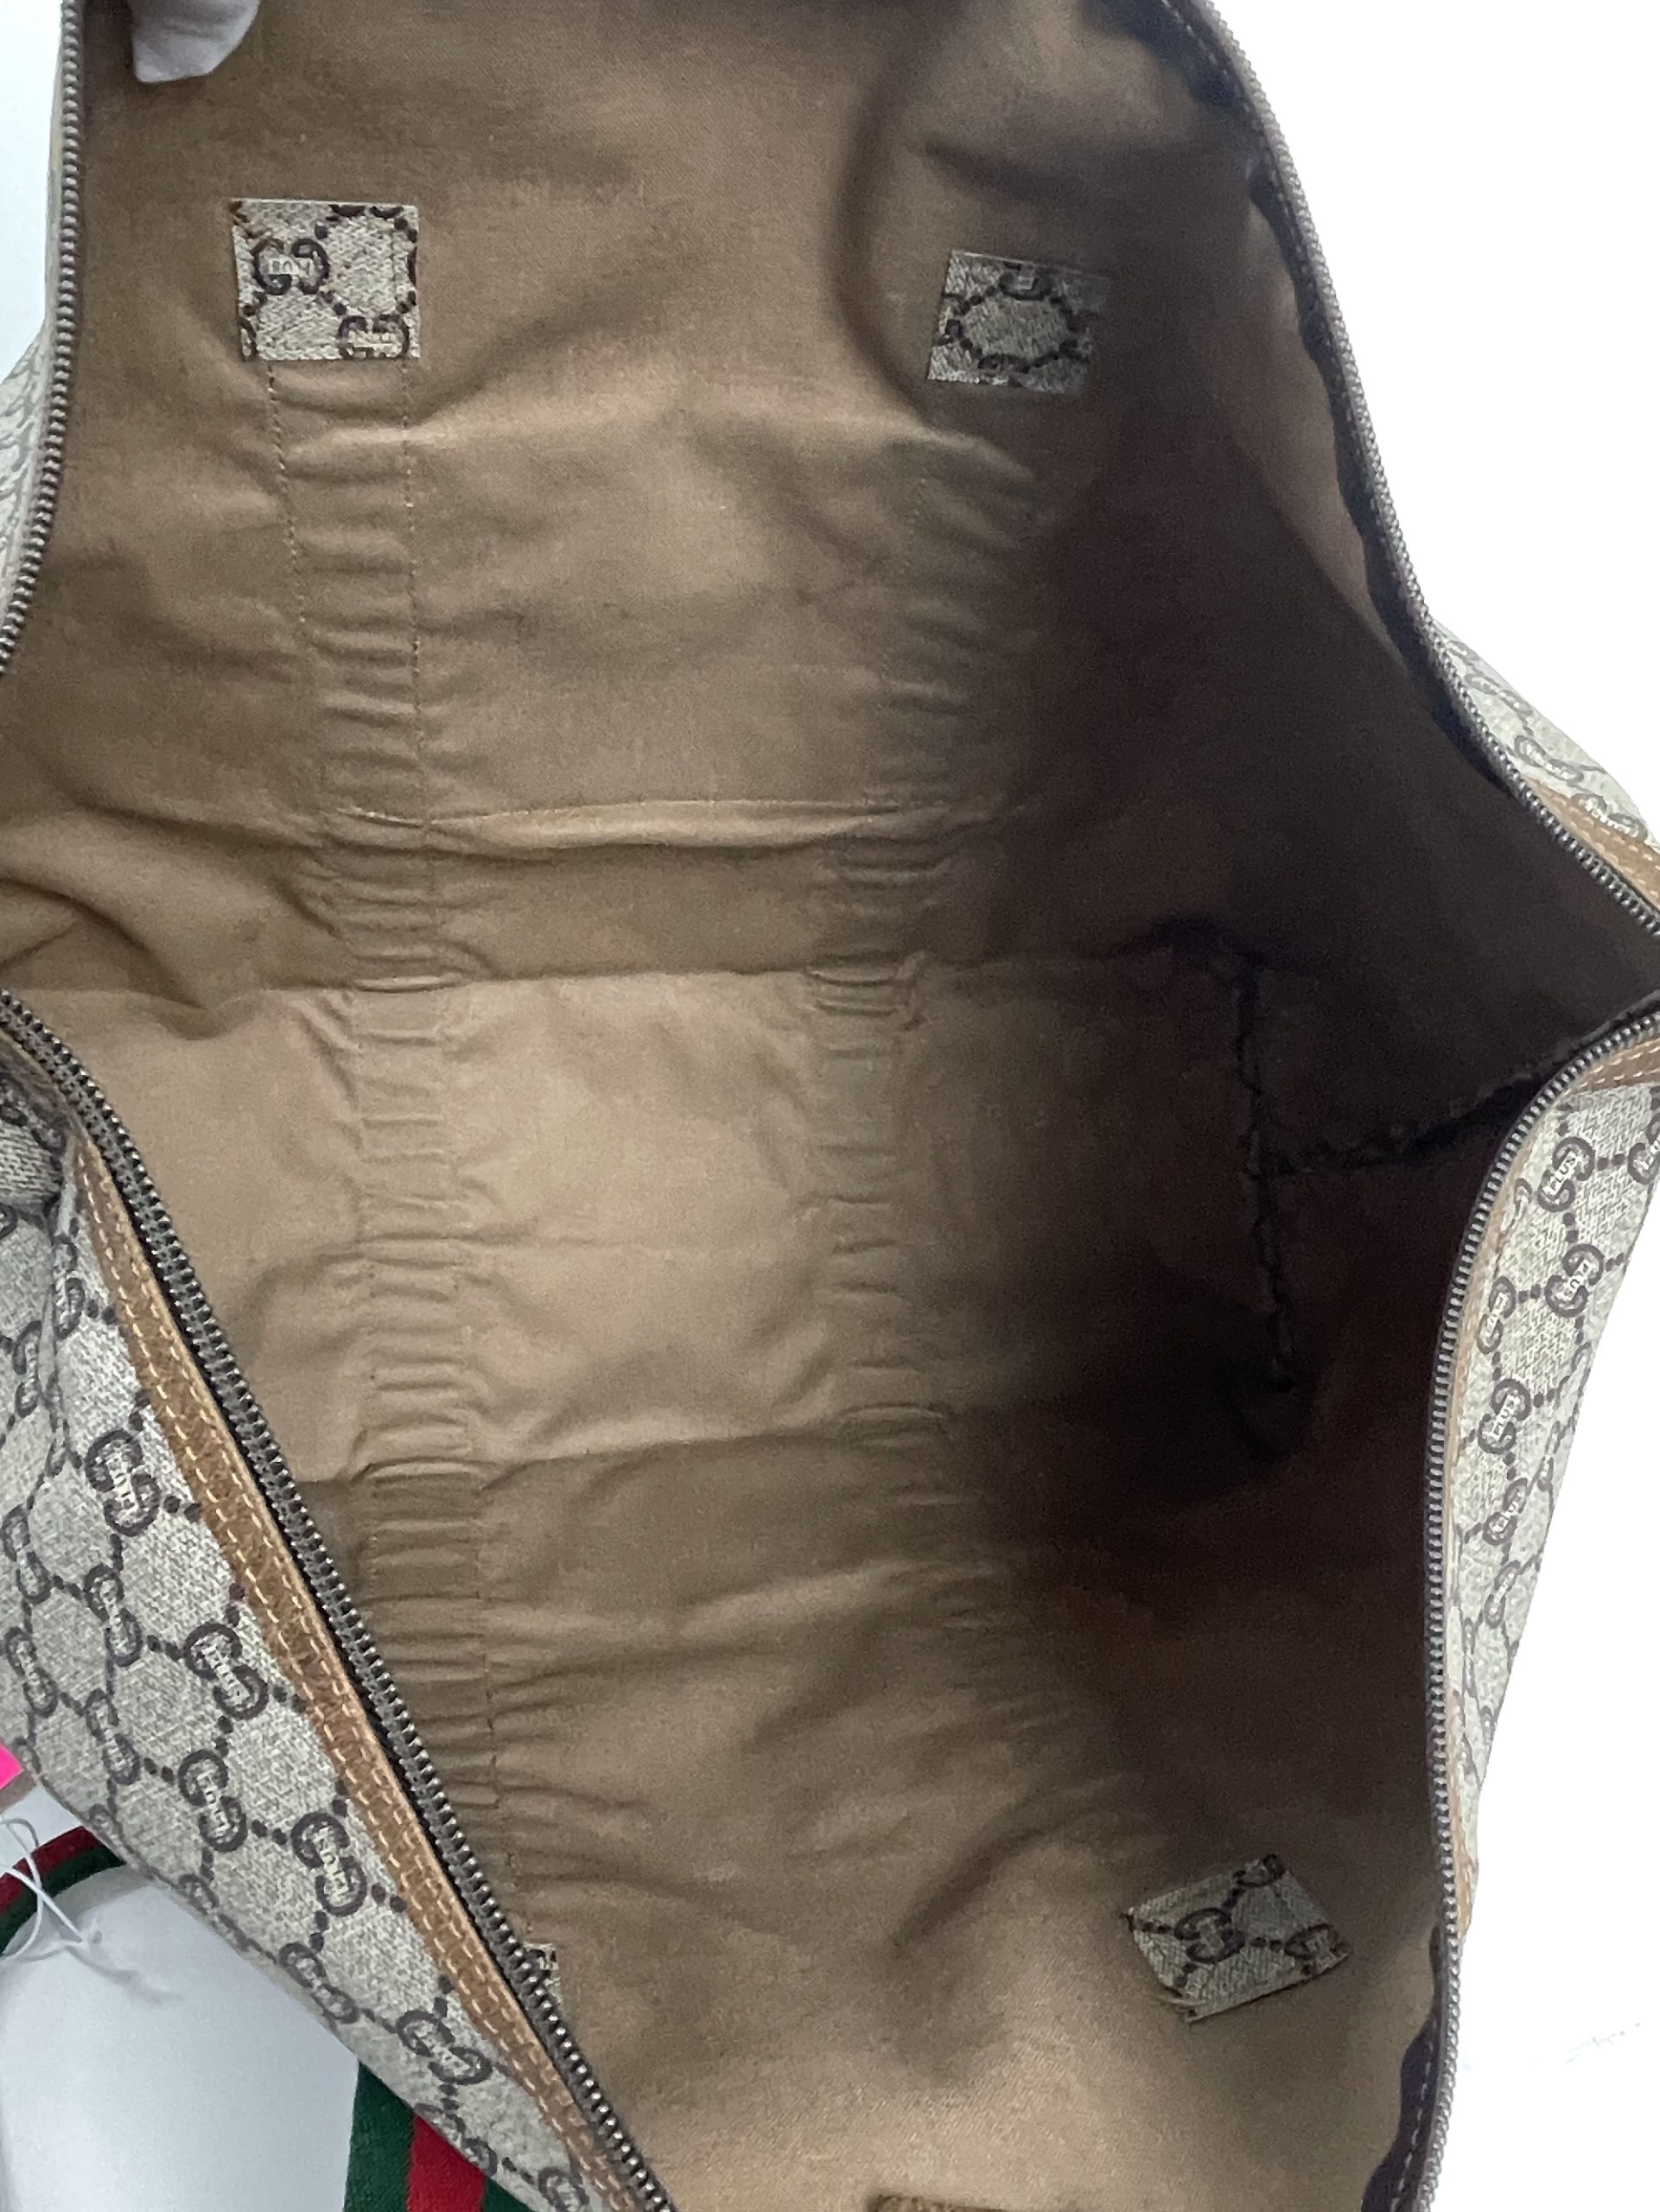 Gucci Vintage Crossbody Bag Review 